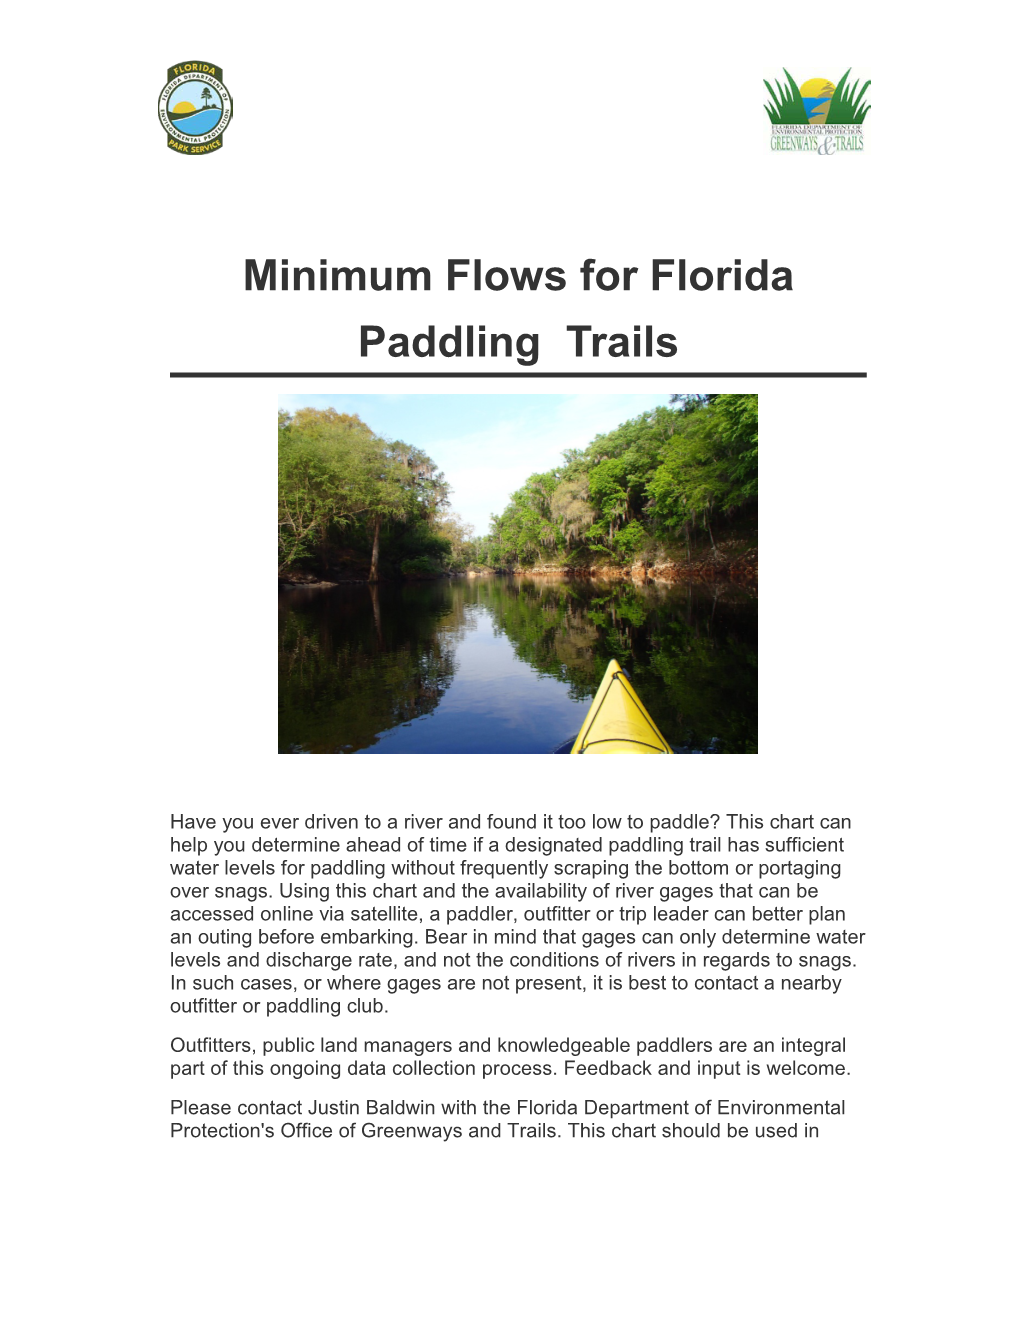 Minimum Flows for Paddling Trails